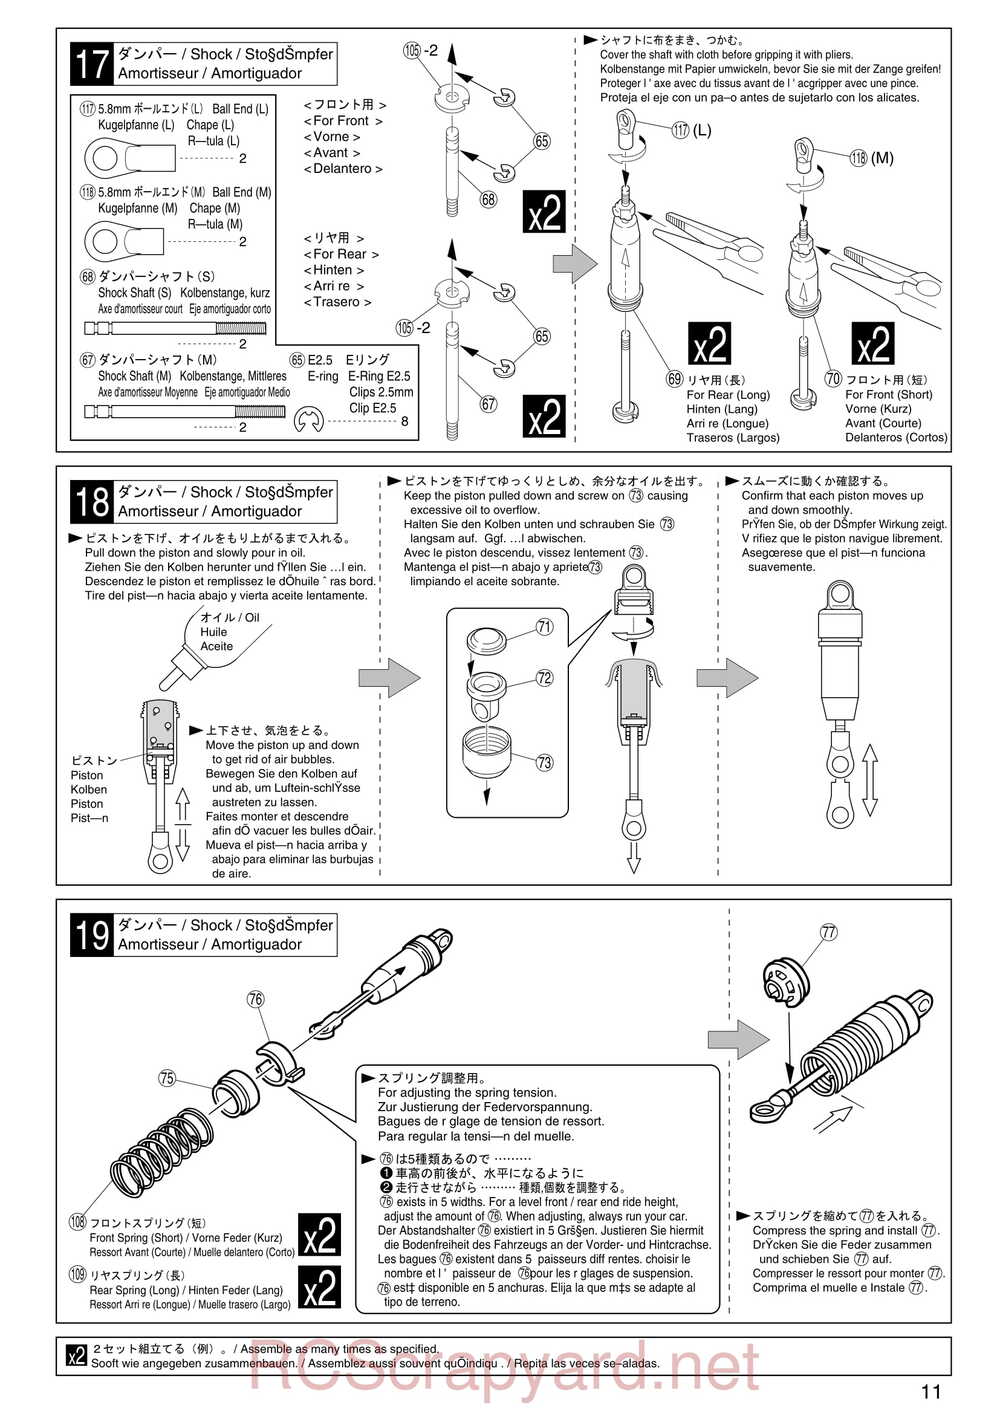 Kyosho - 31092 - GP Ultima RB Racing Sports - Manual - Page 11